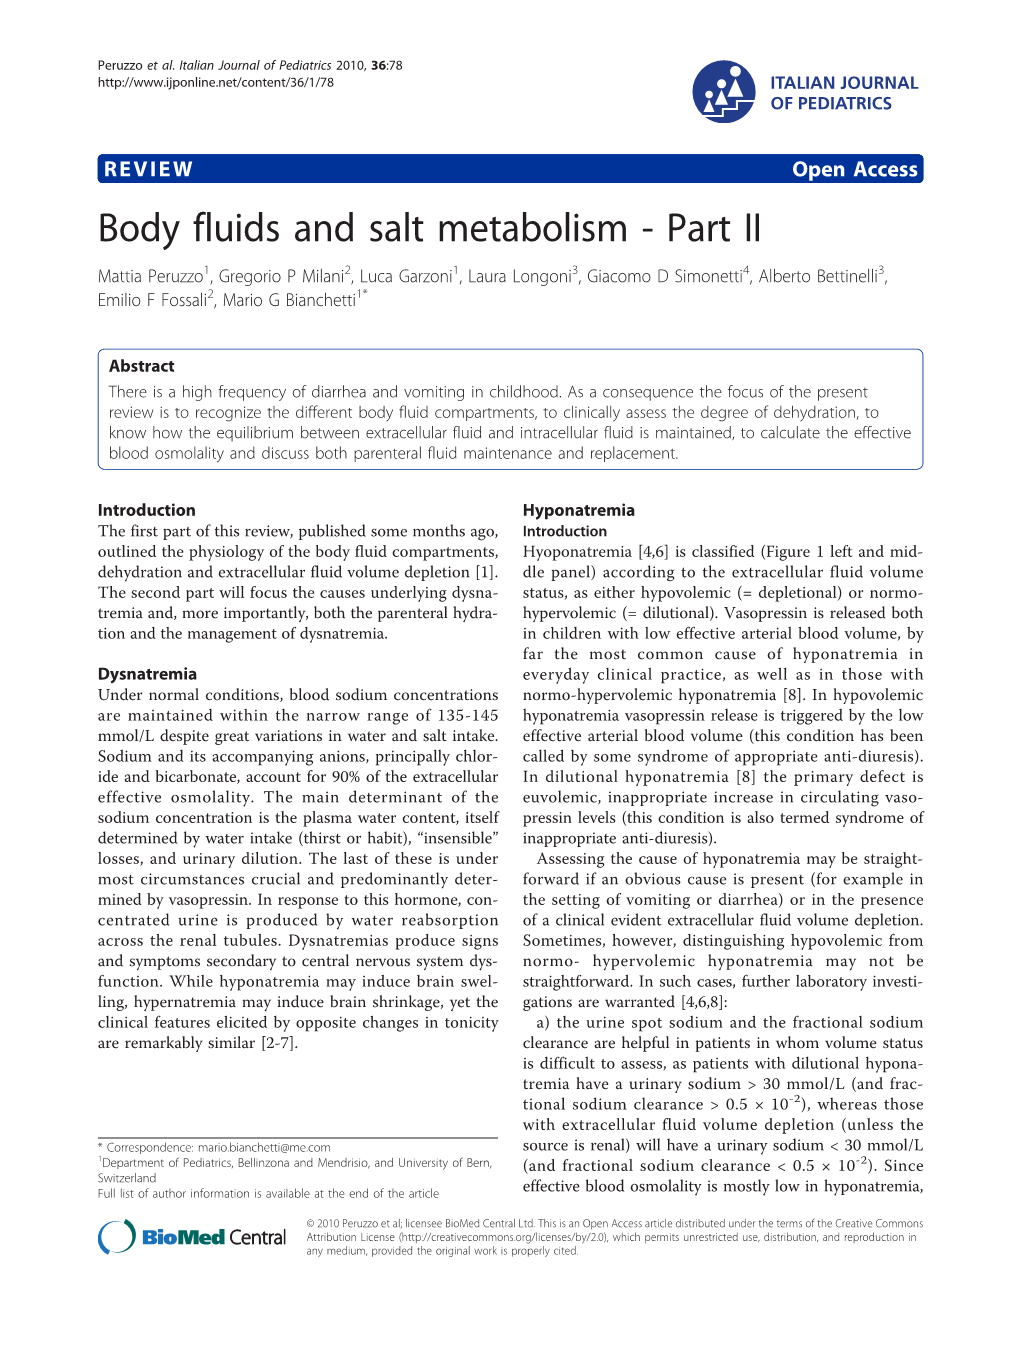 Body Fluids and Salt Metabolism